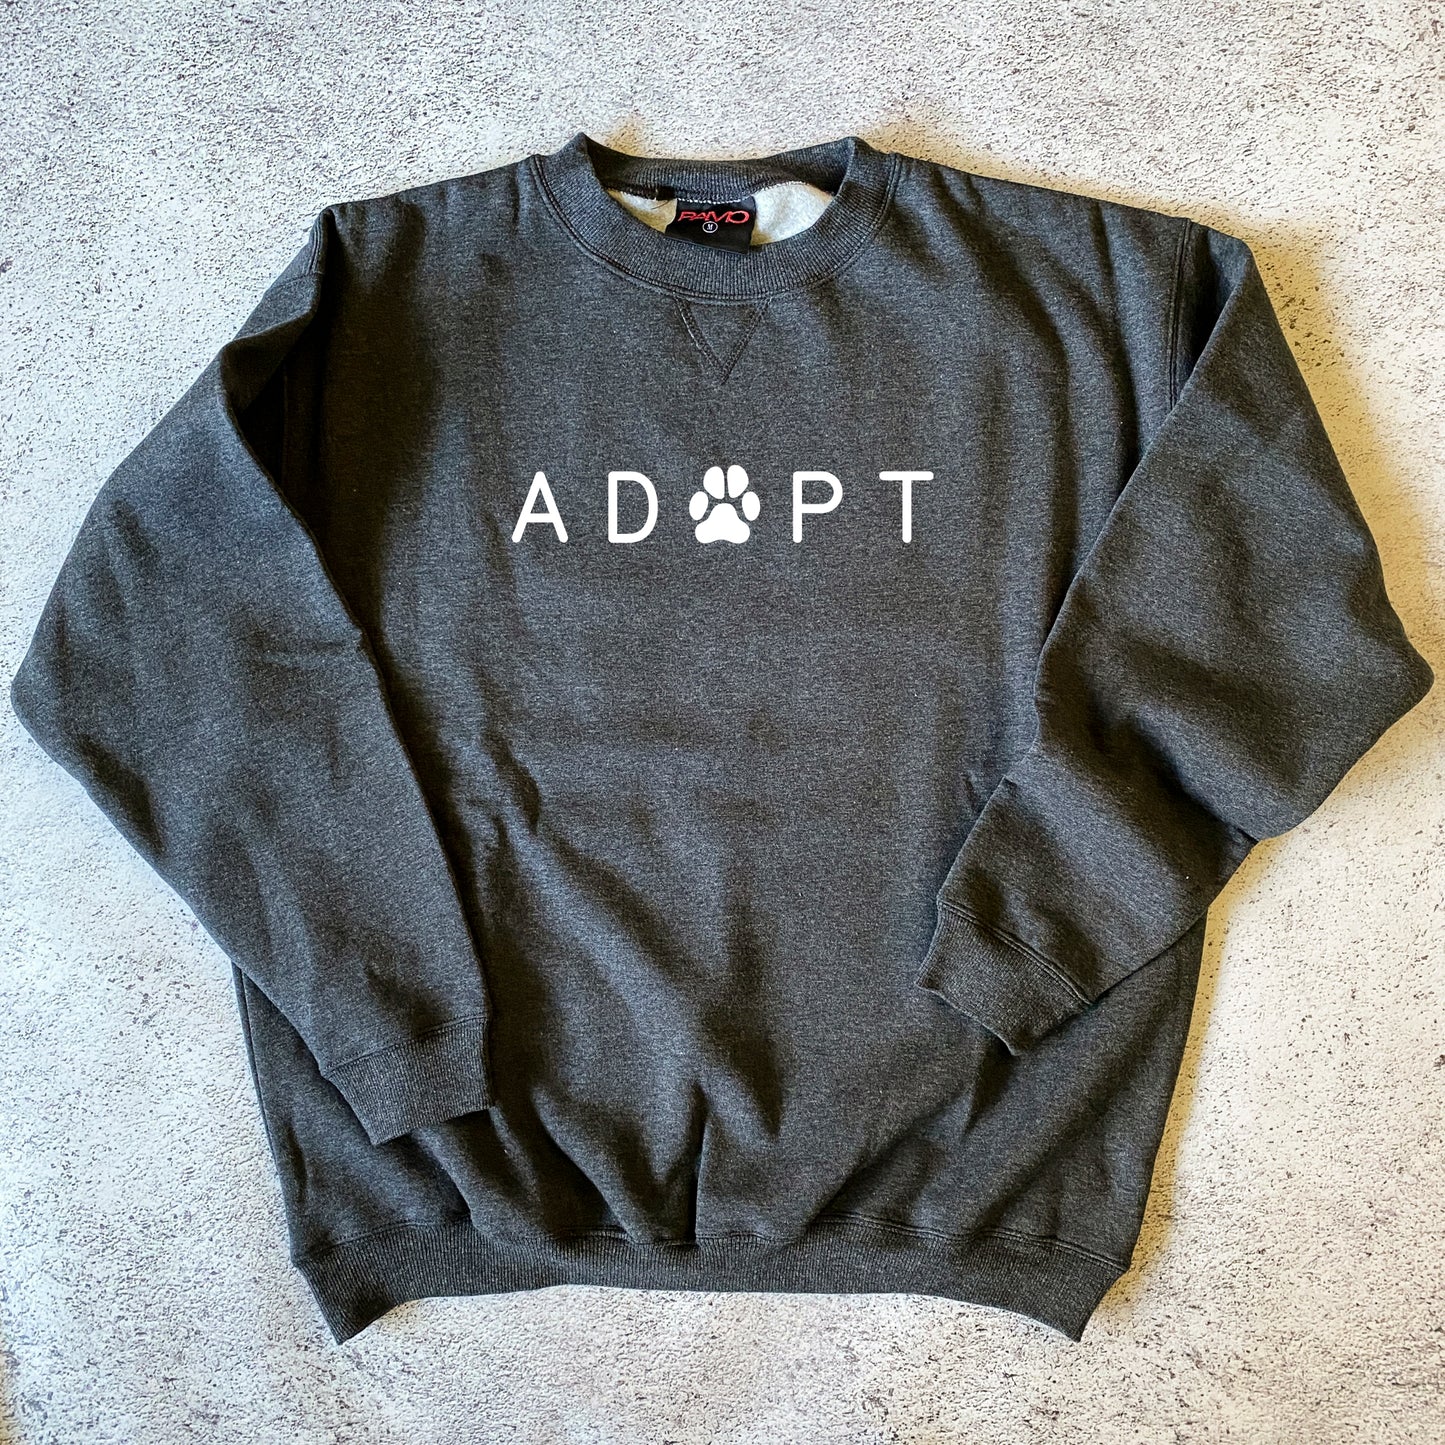 Adopt Sweatshirt